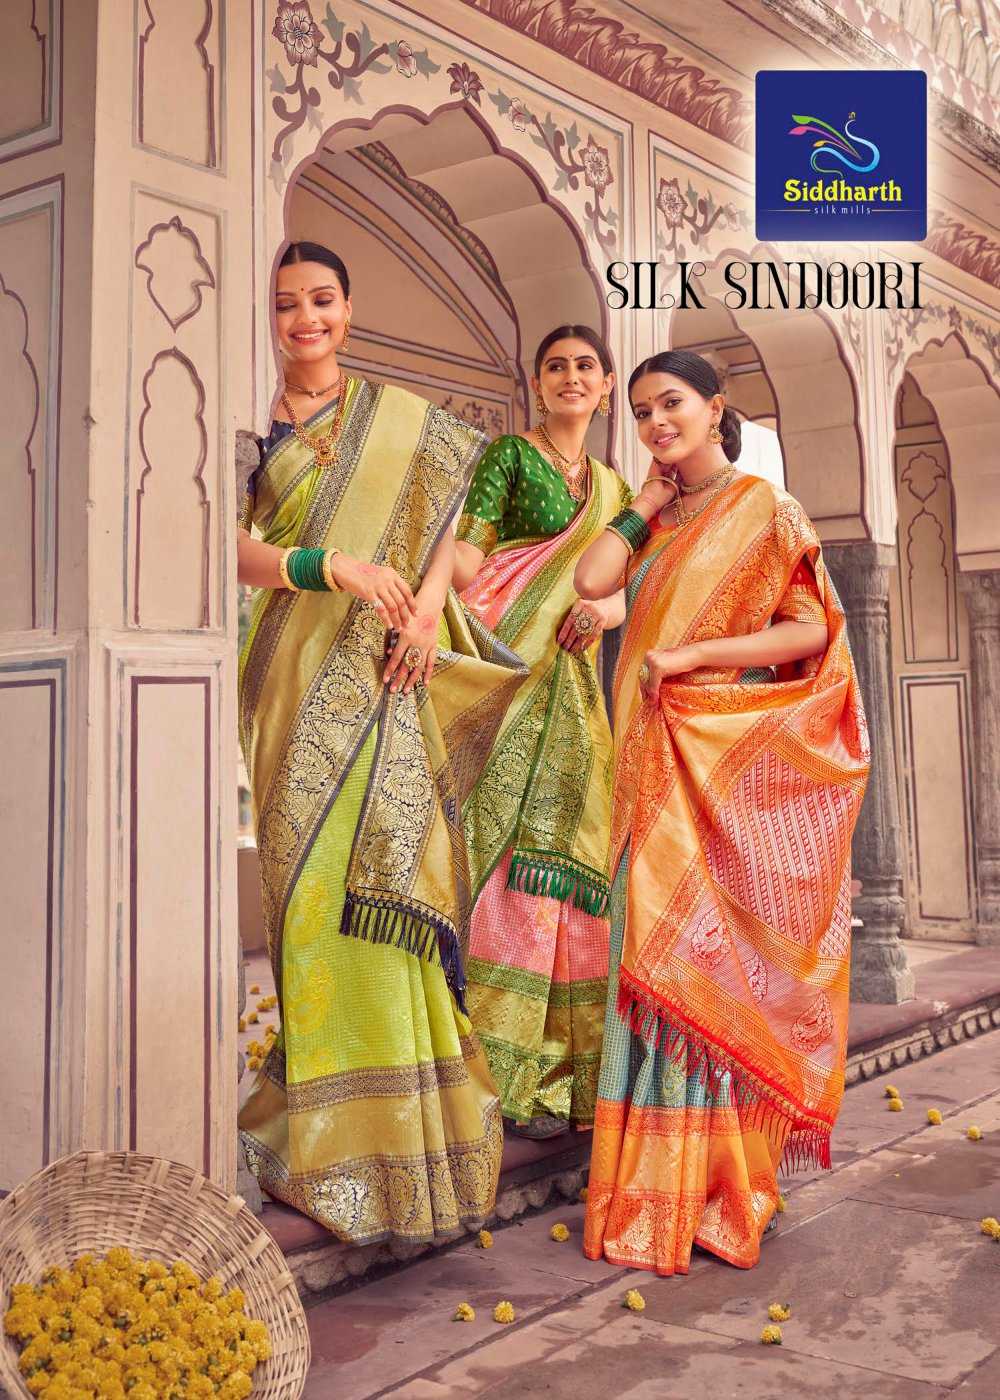 Buy The Flying Tree Women's Satin Underskirt Saree Petticoat, Sari  Underwear, Saree Shapewear, Free Size